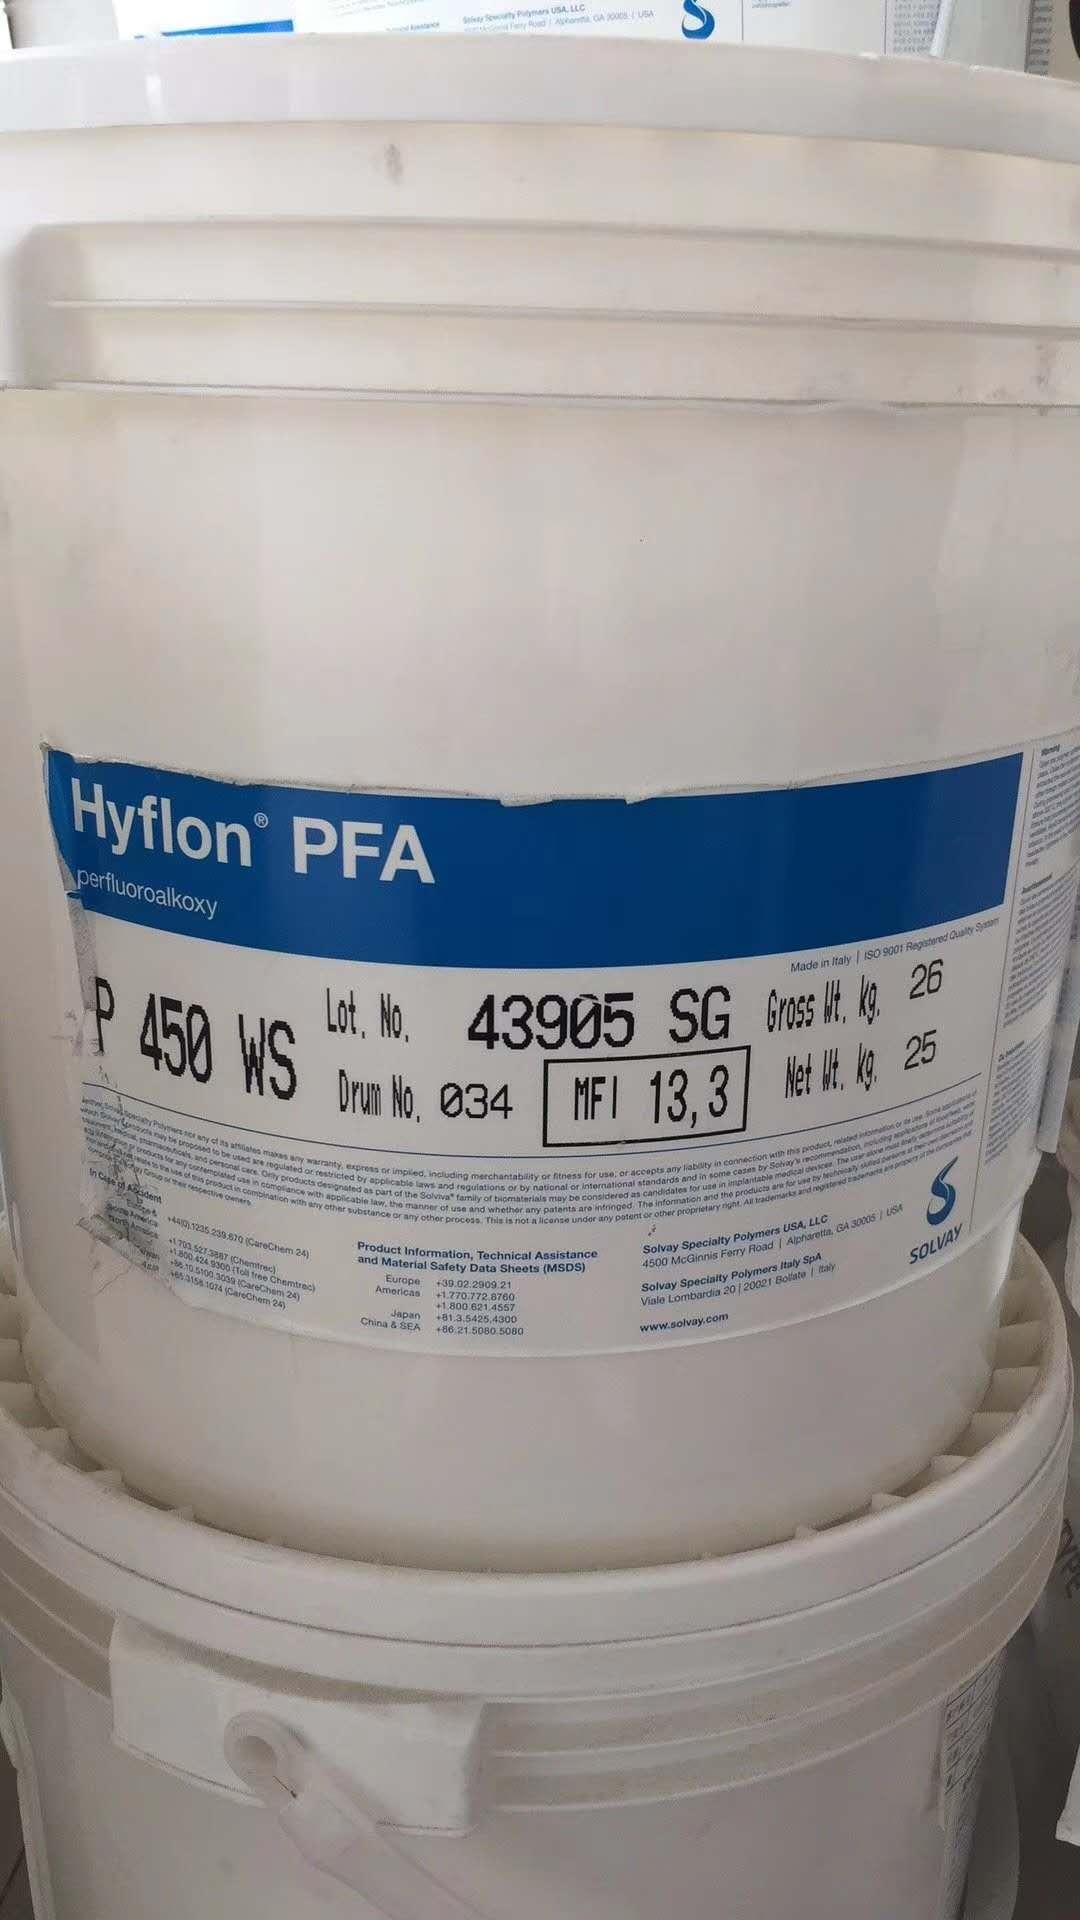 Hyflon PFA P450 WS